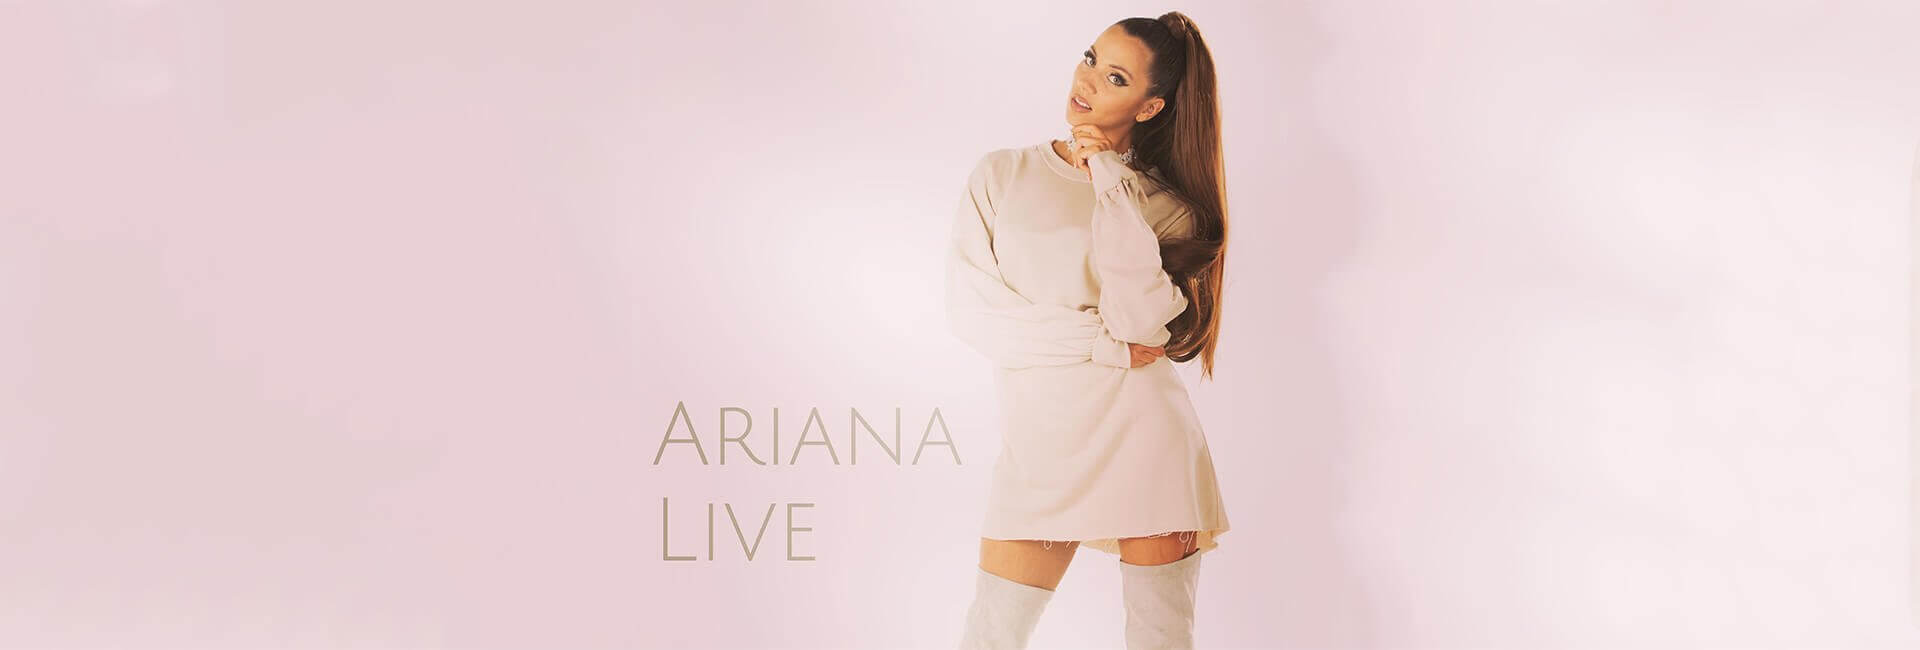 Ariana Live